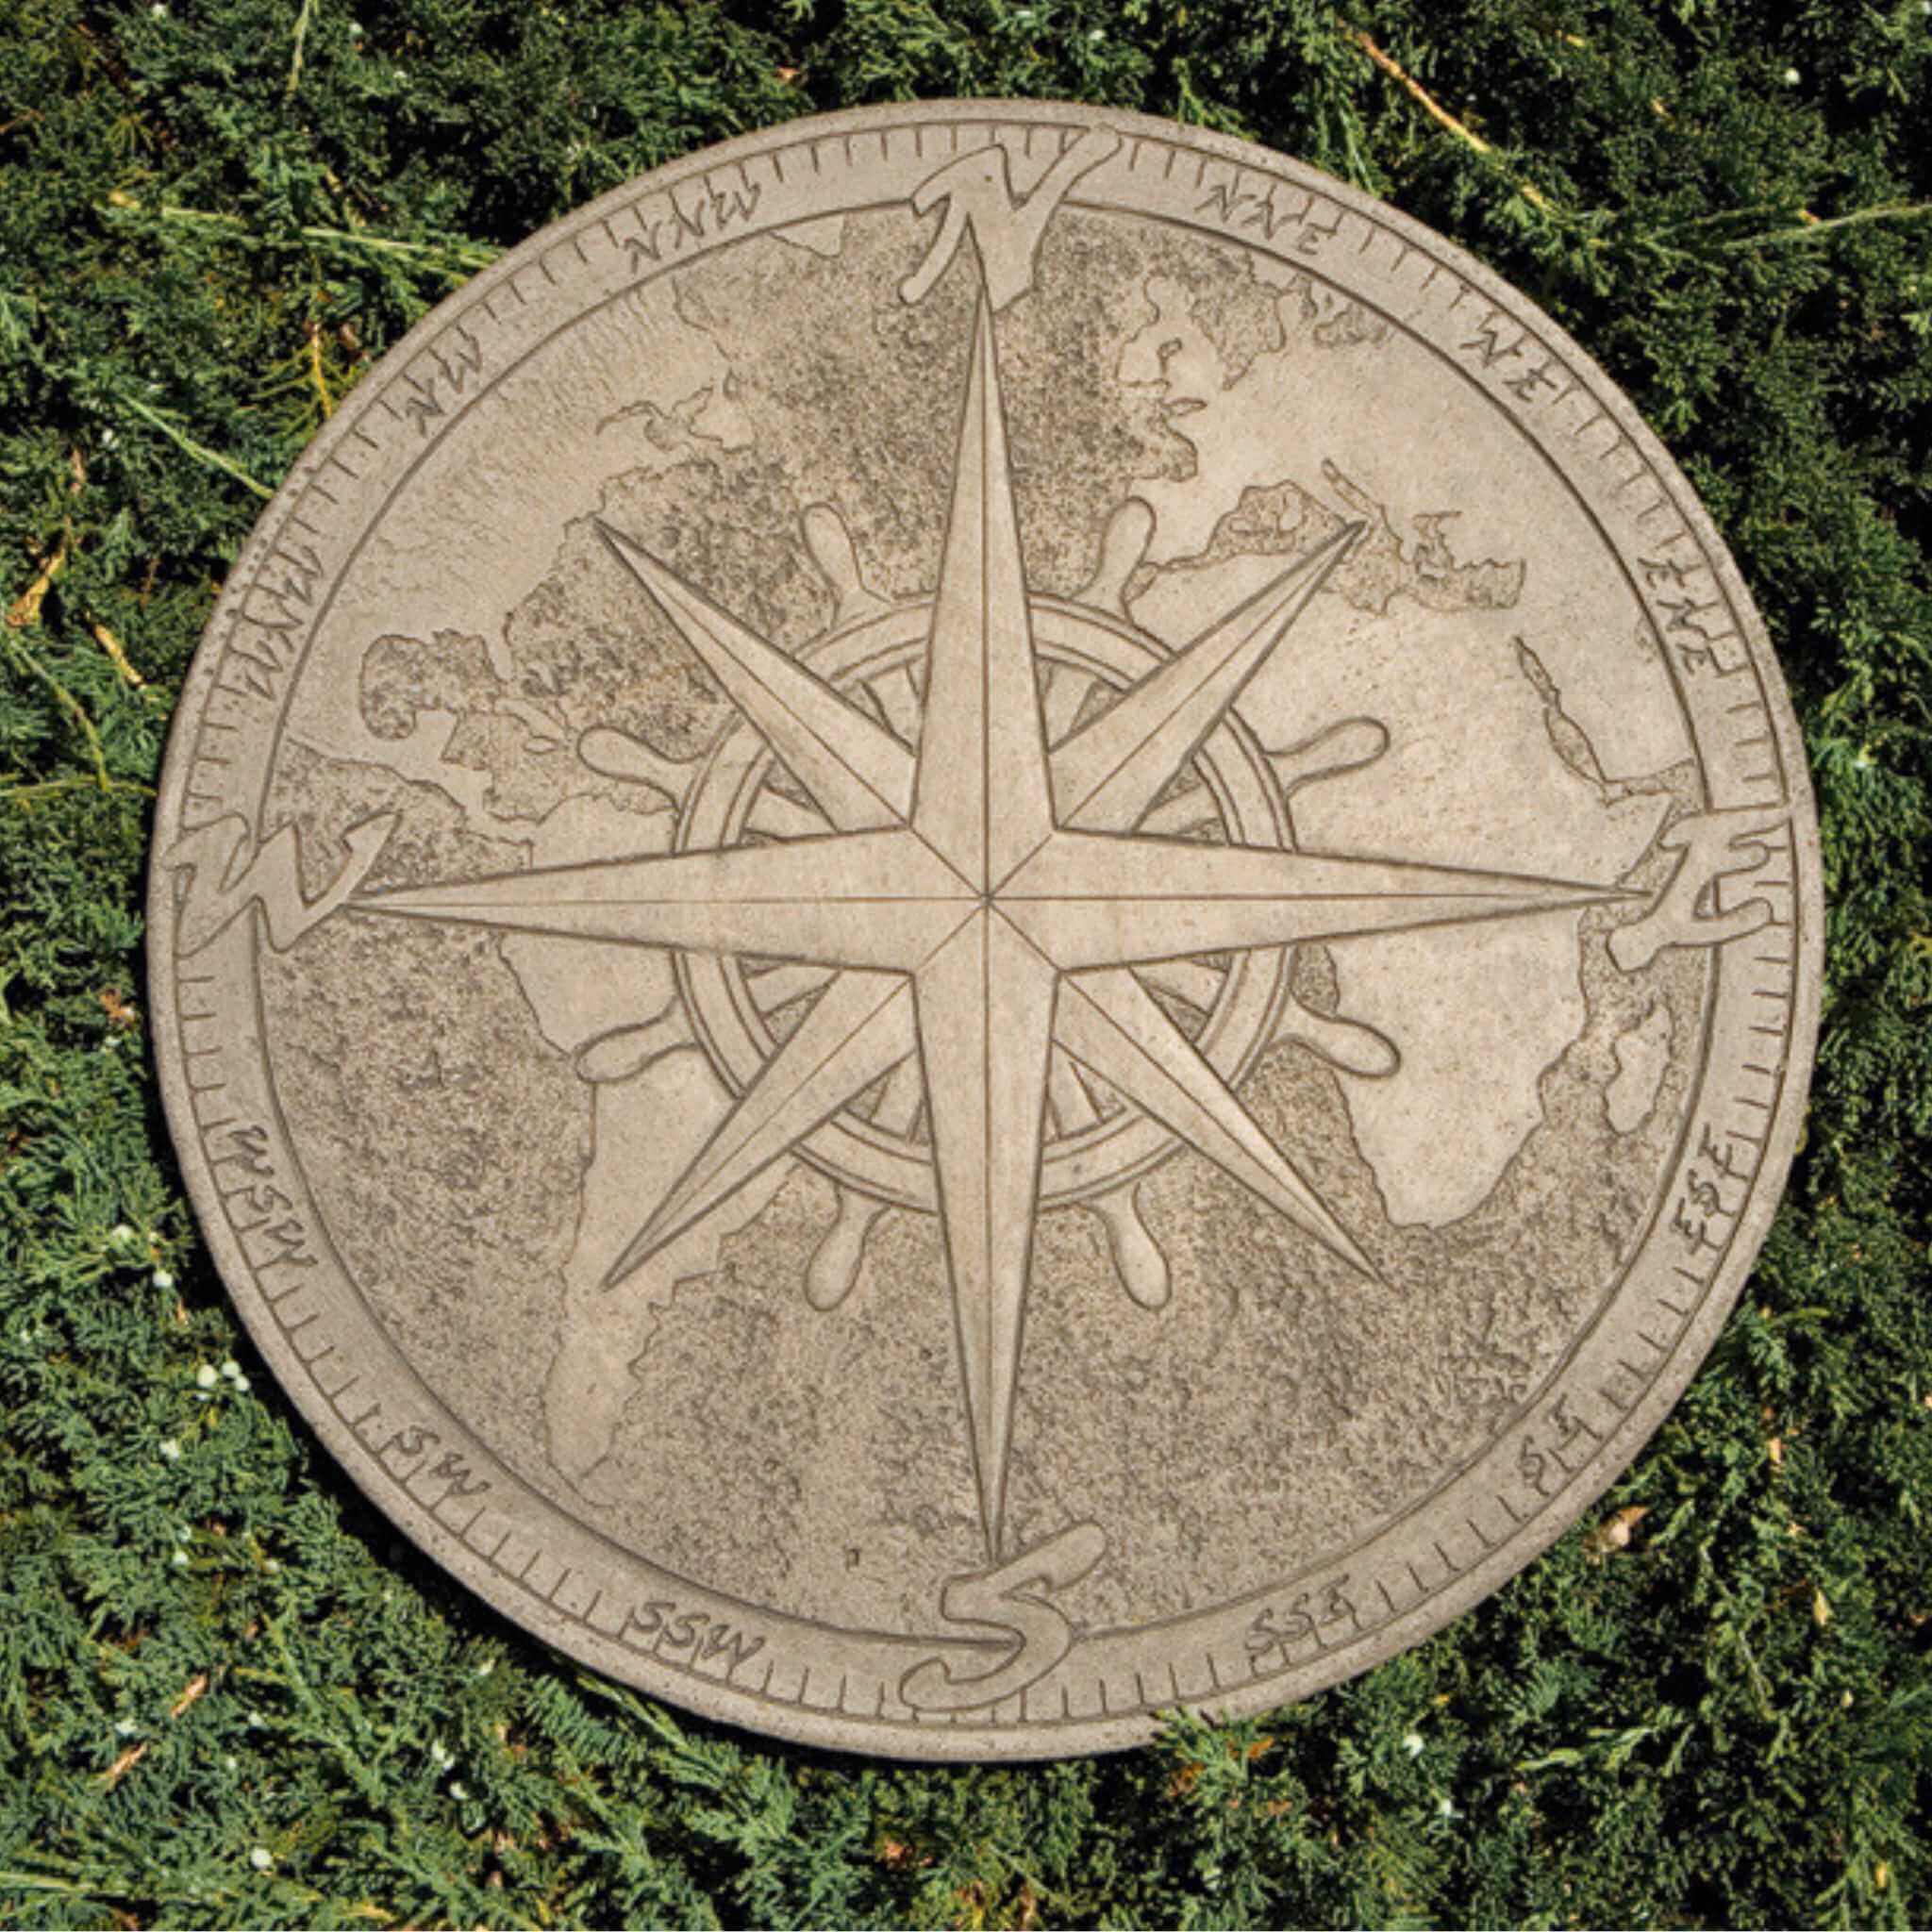 Compass Concrete Round Stepping Stone - Massarellis #1930